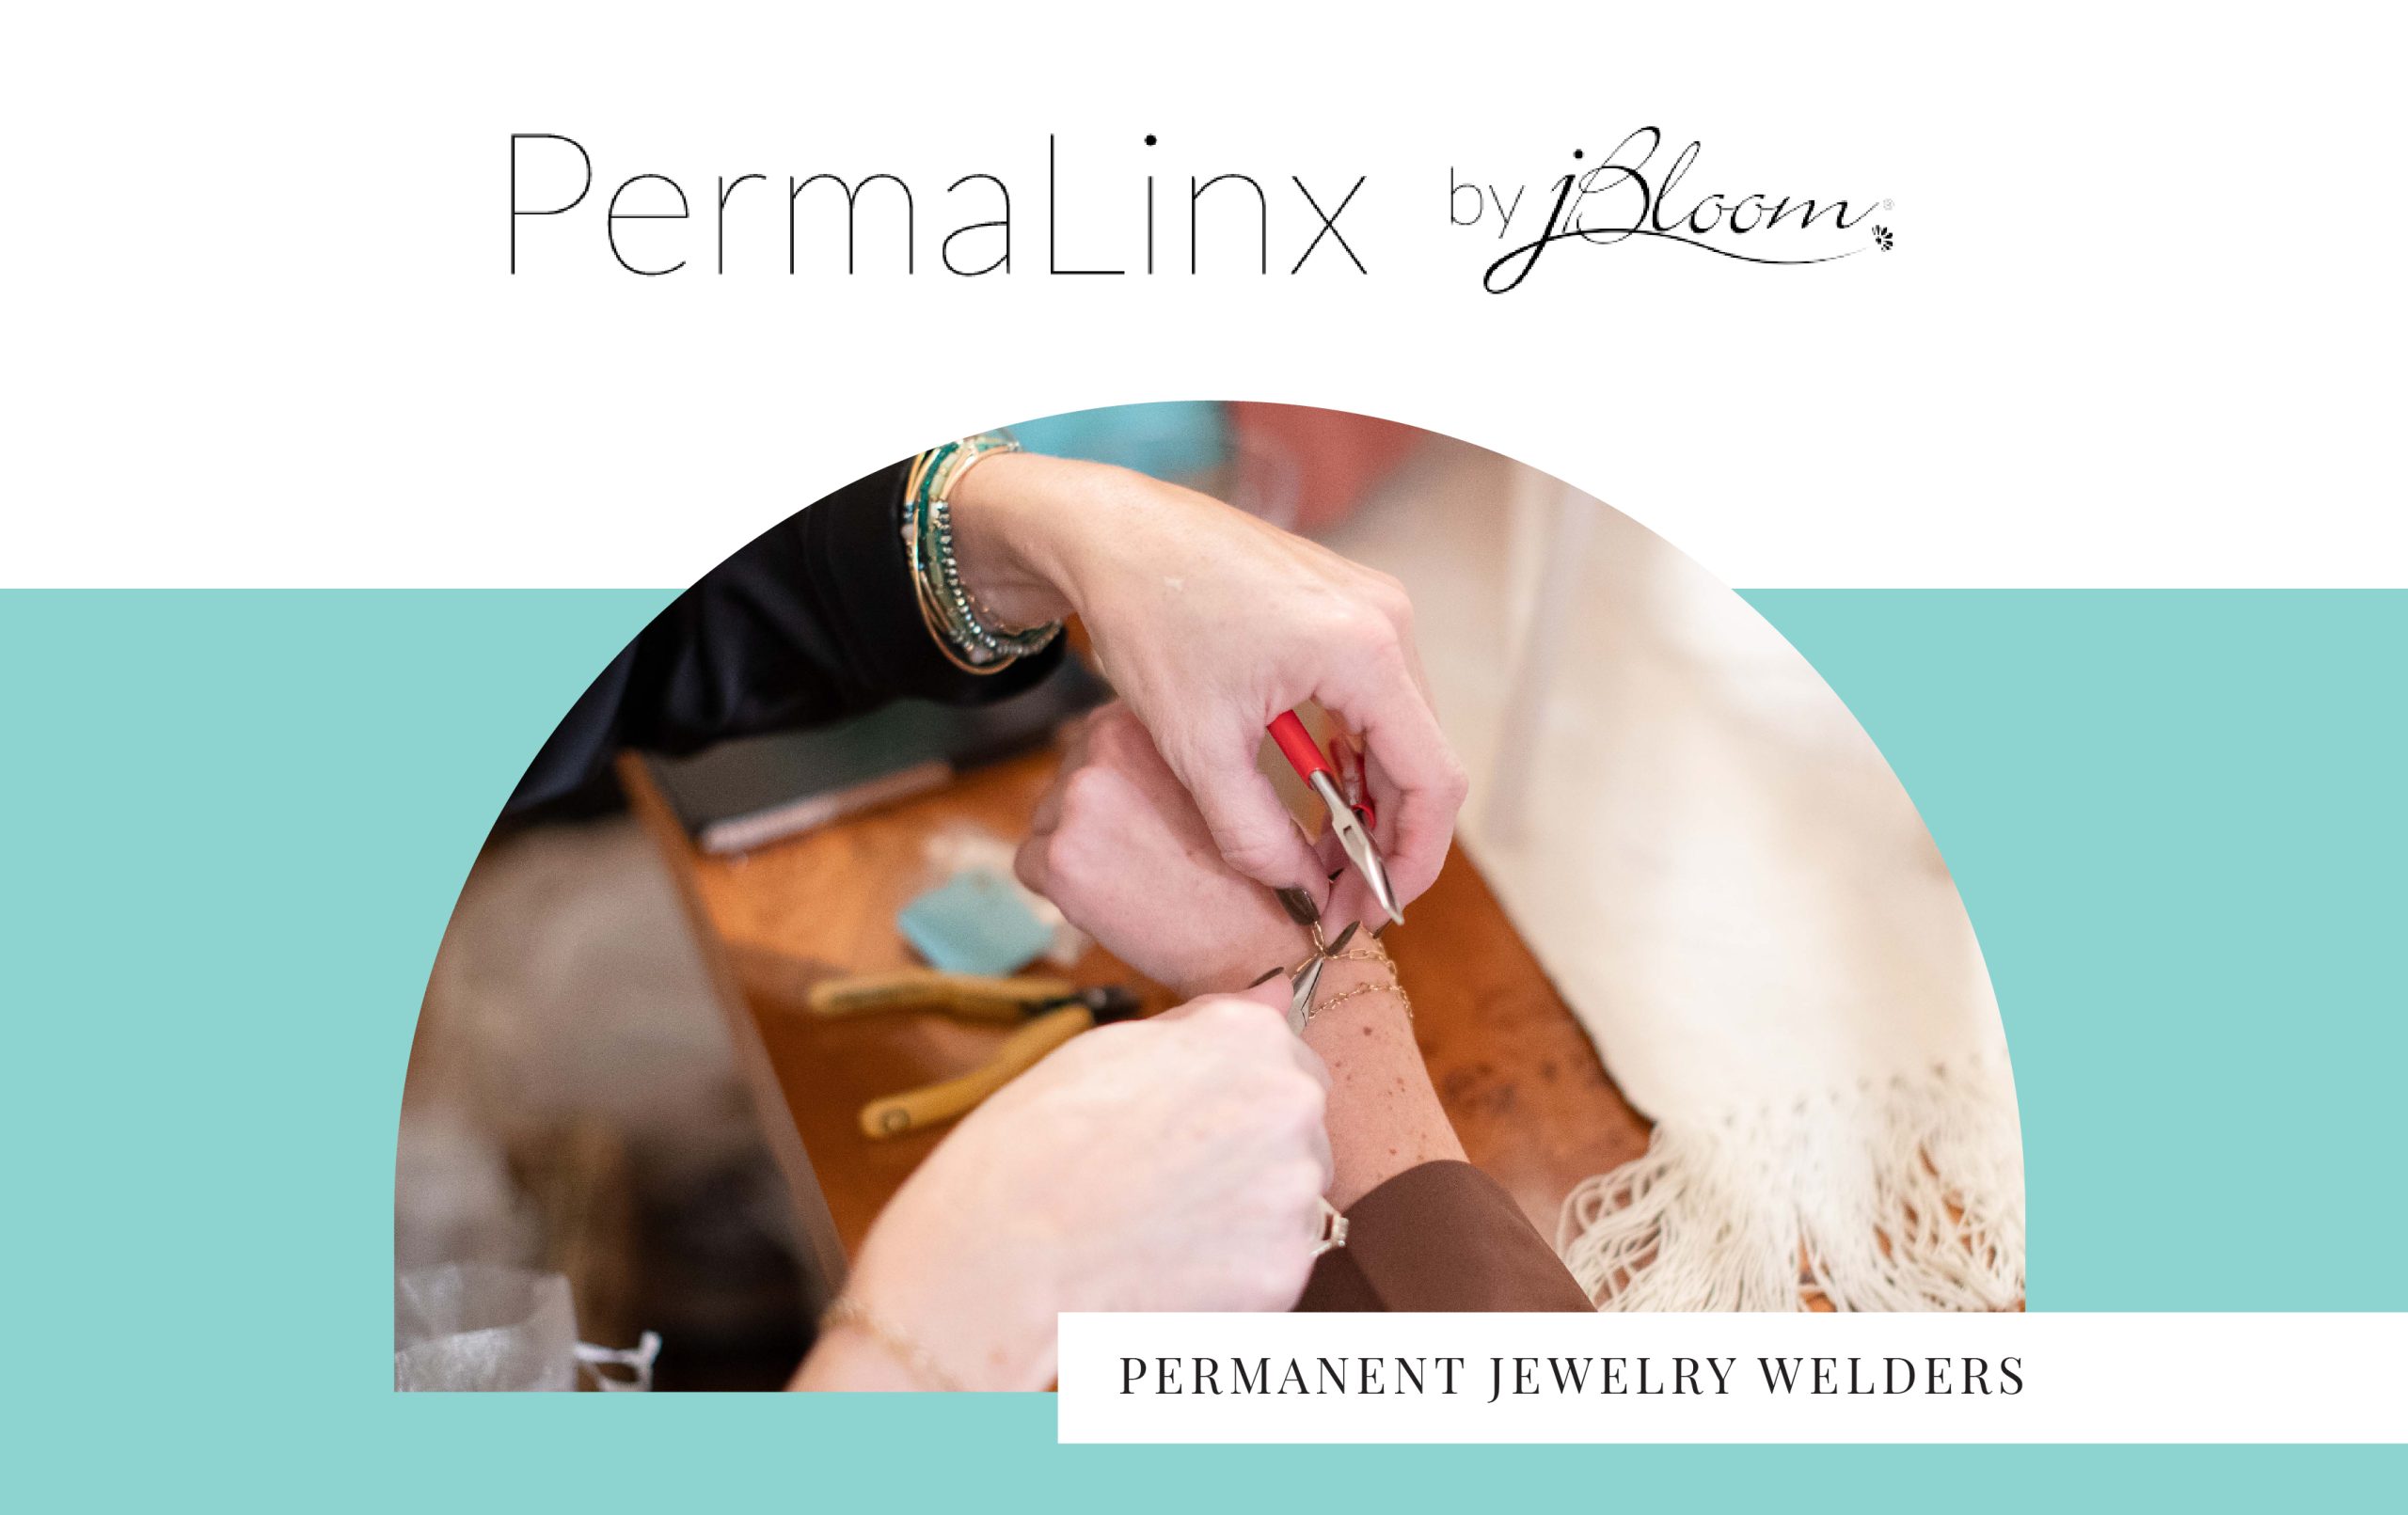 permanent jewelry welders